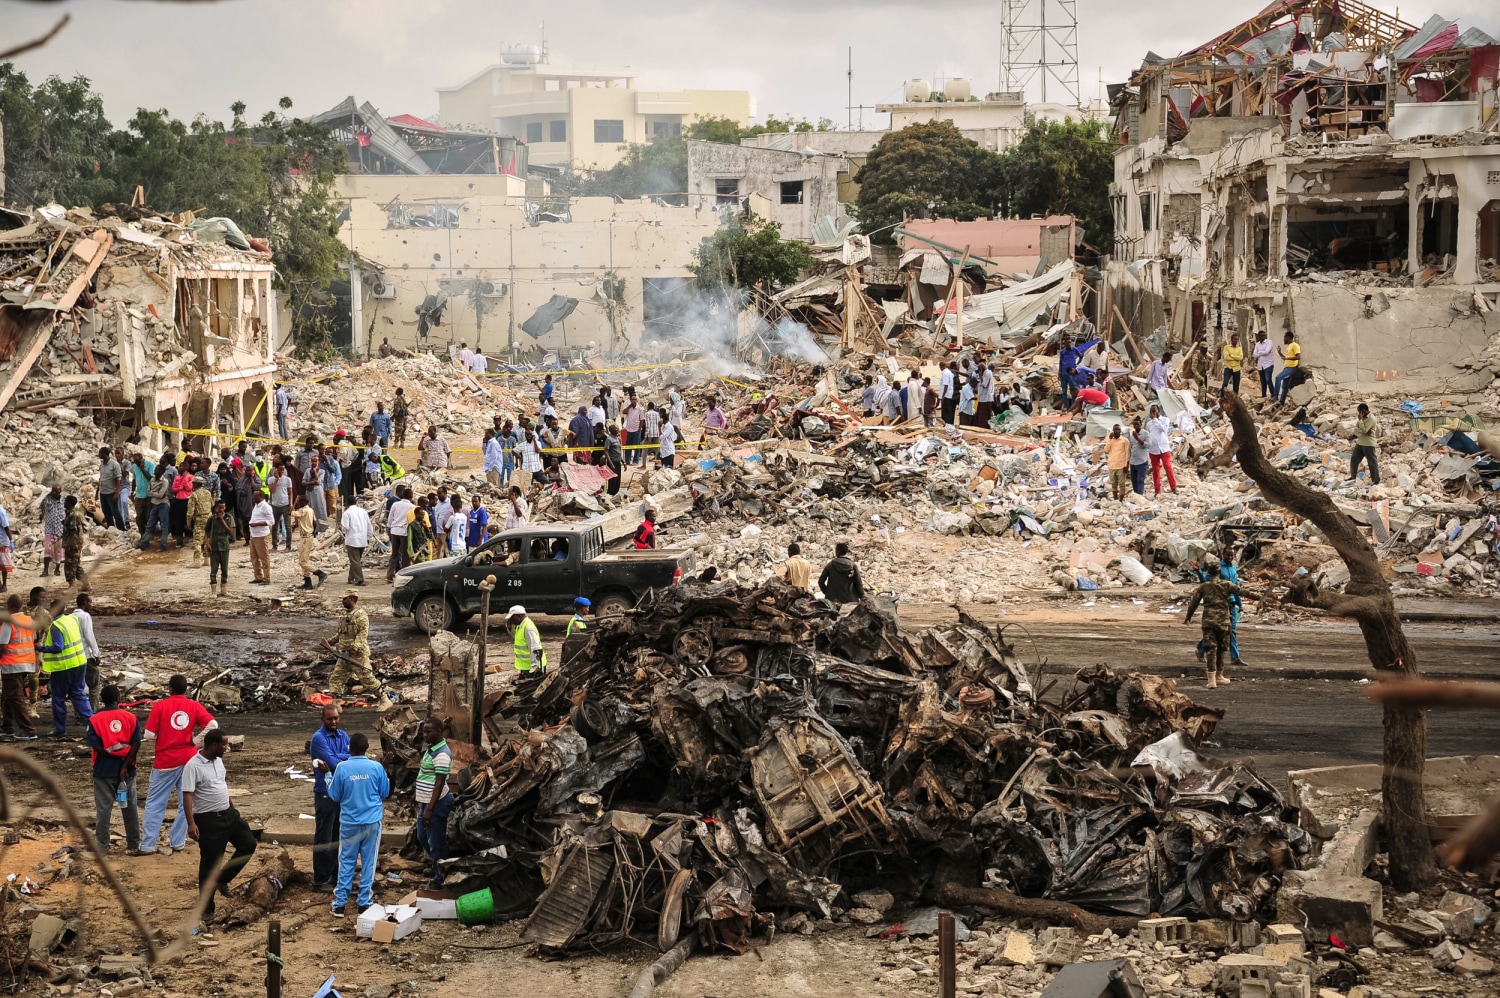 Somalia Bomb Attack Killed Two U.S. Citizens, State Department Says